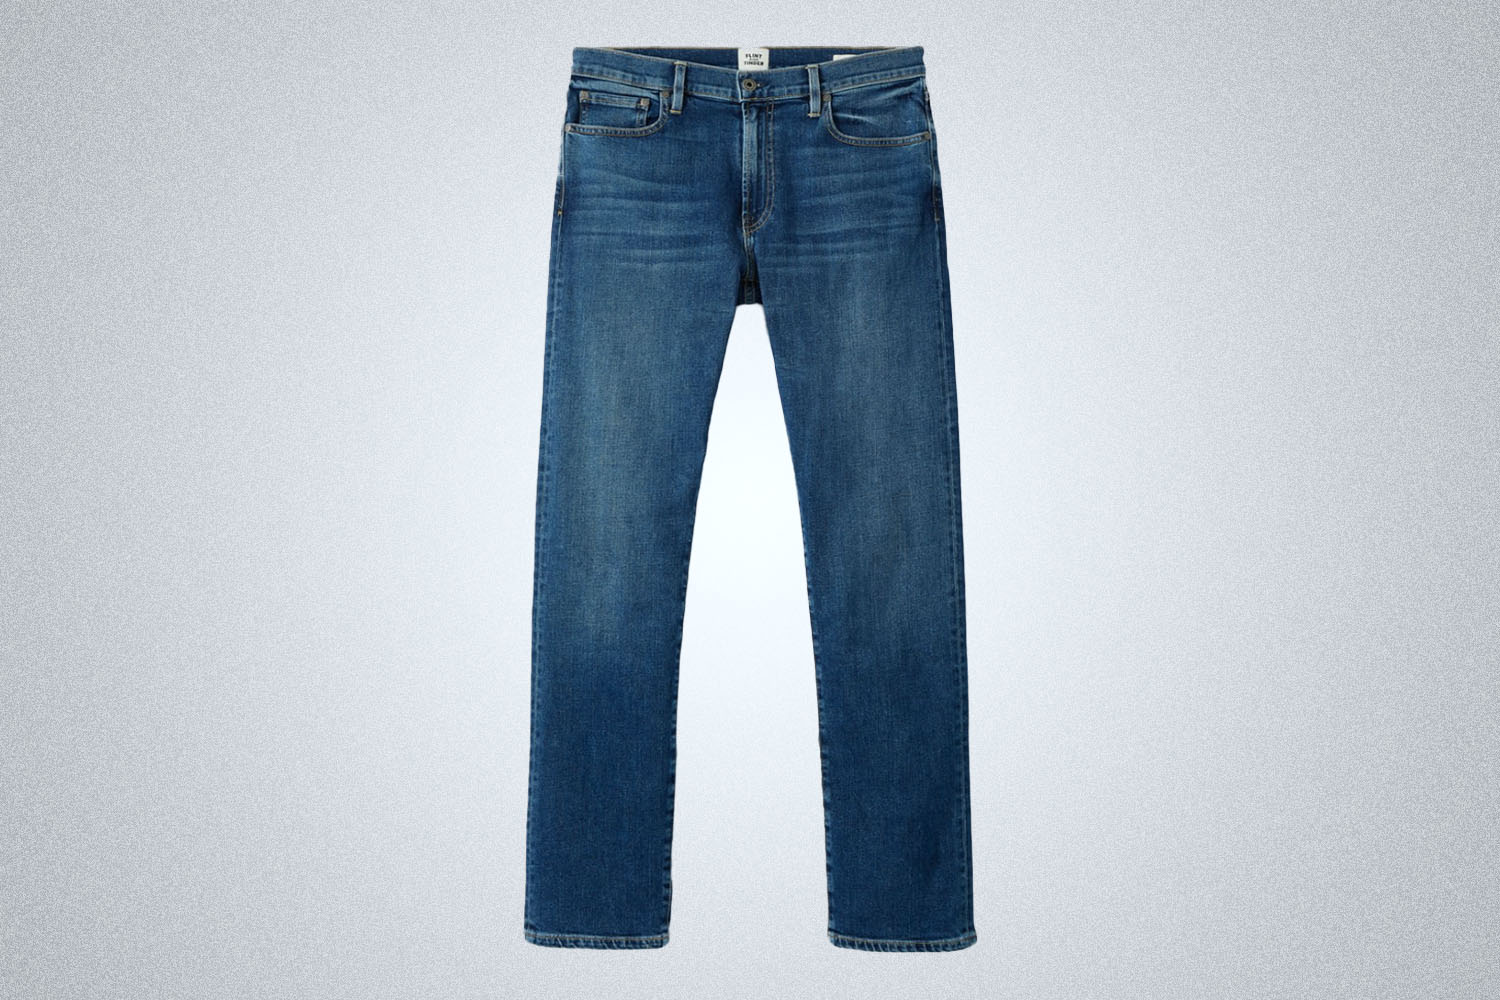 a pair of slight medium blue denim jeans